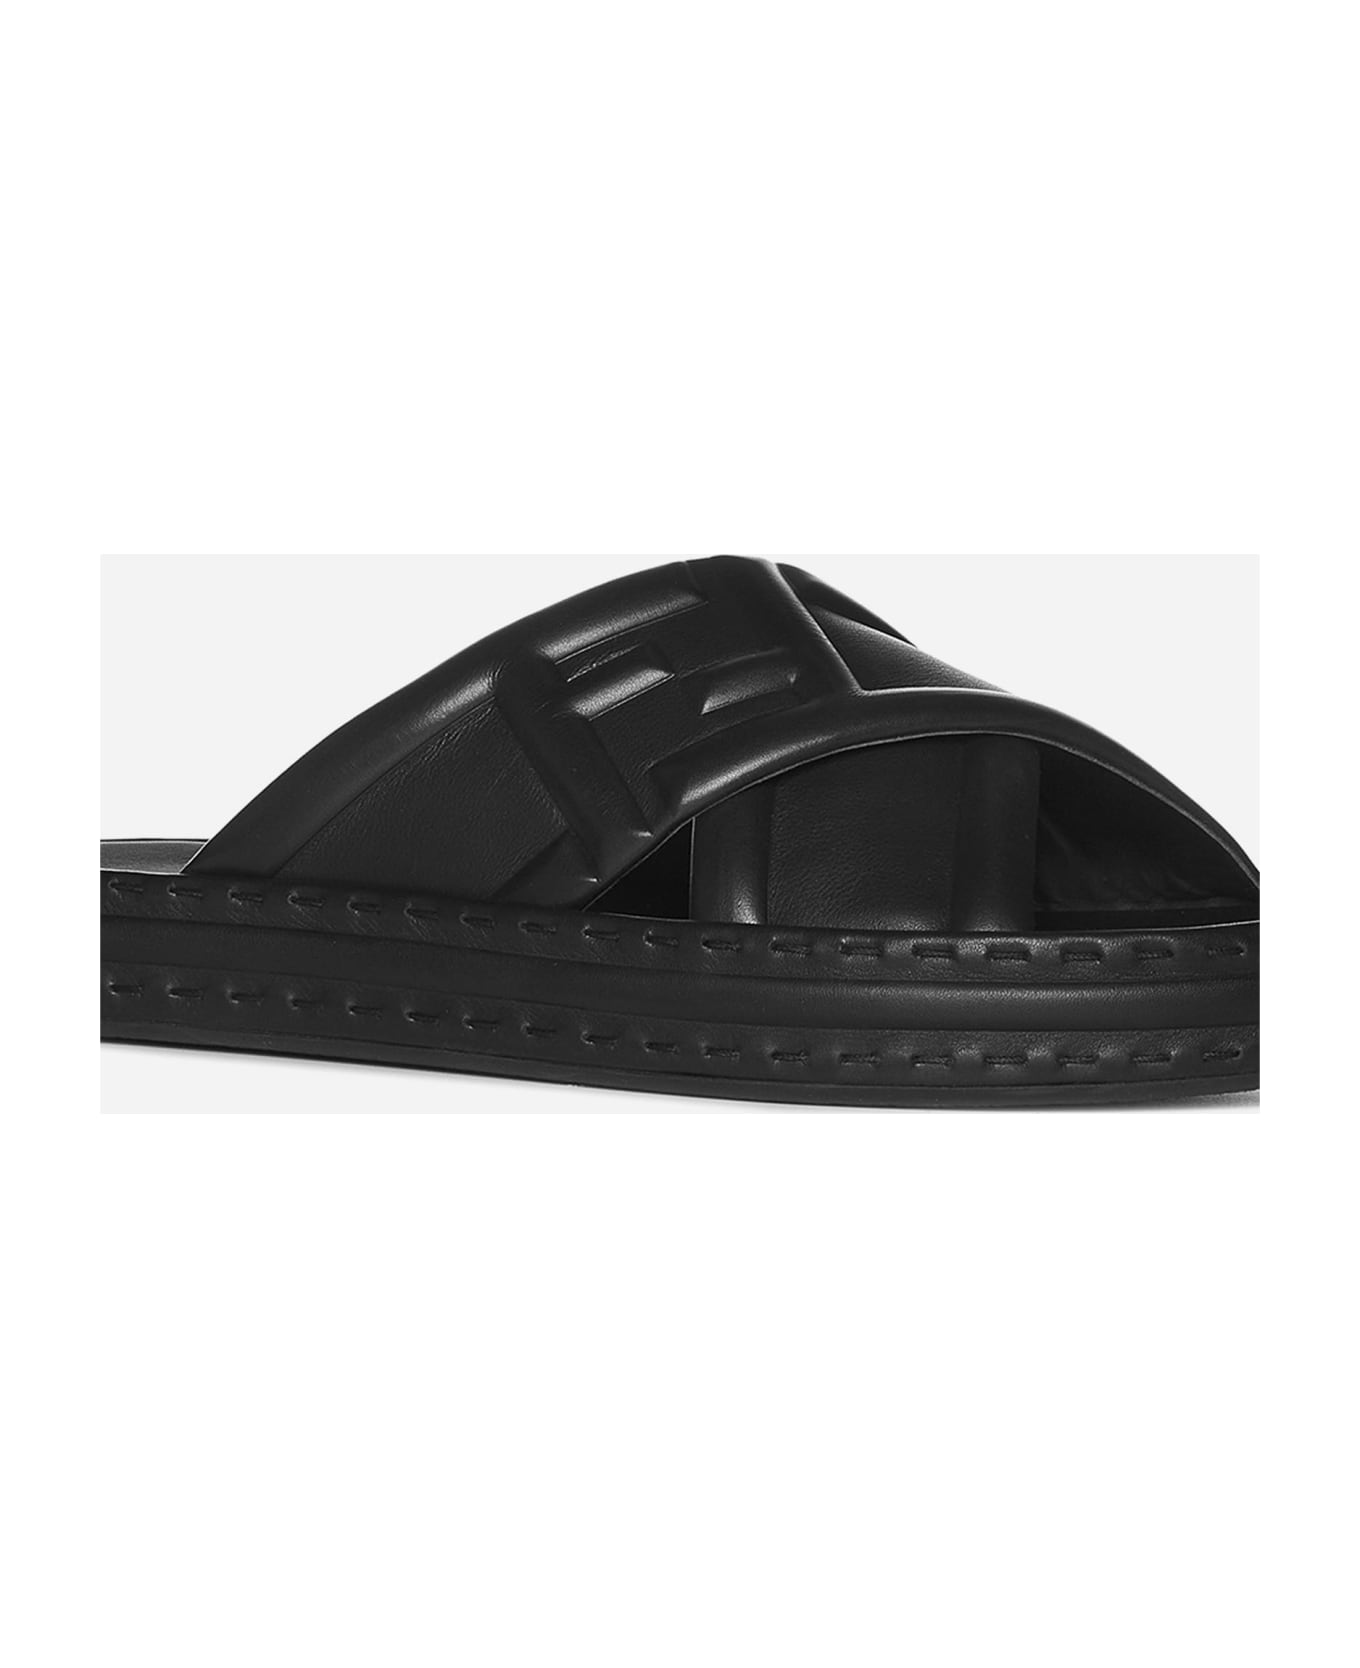 Fendi Ff Nappa Leather Sandals - BLACK その他各種シューズ